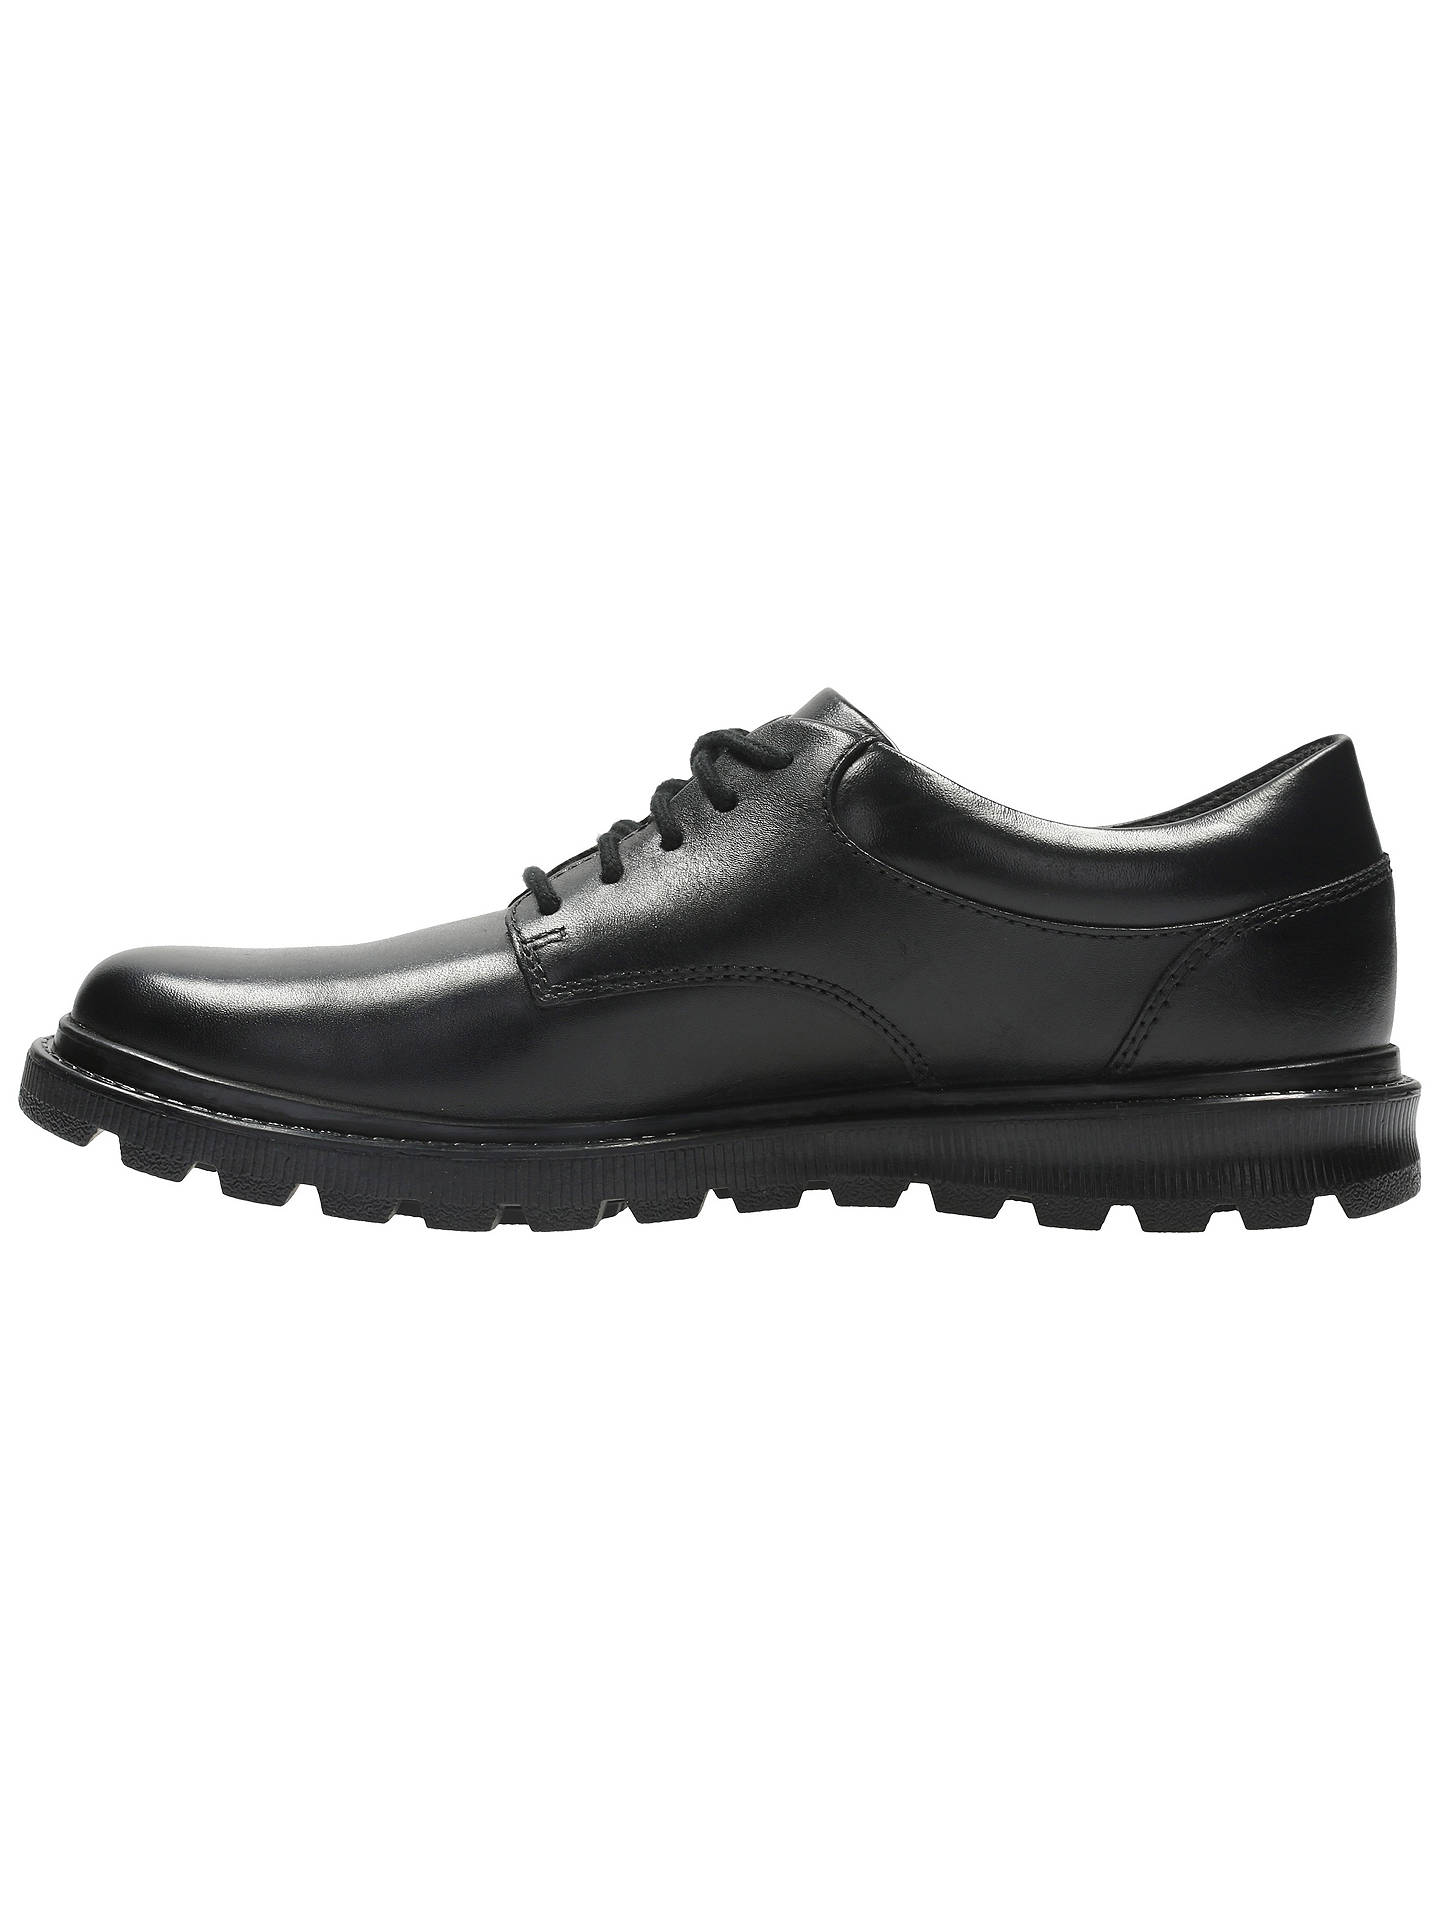 Clarks Children's Mayes Trek Leather School Shoes, Black at John Lewis ...